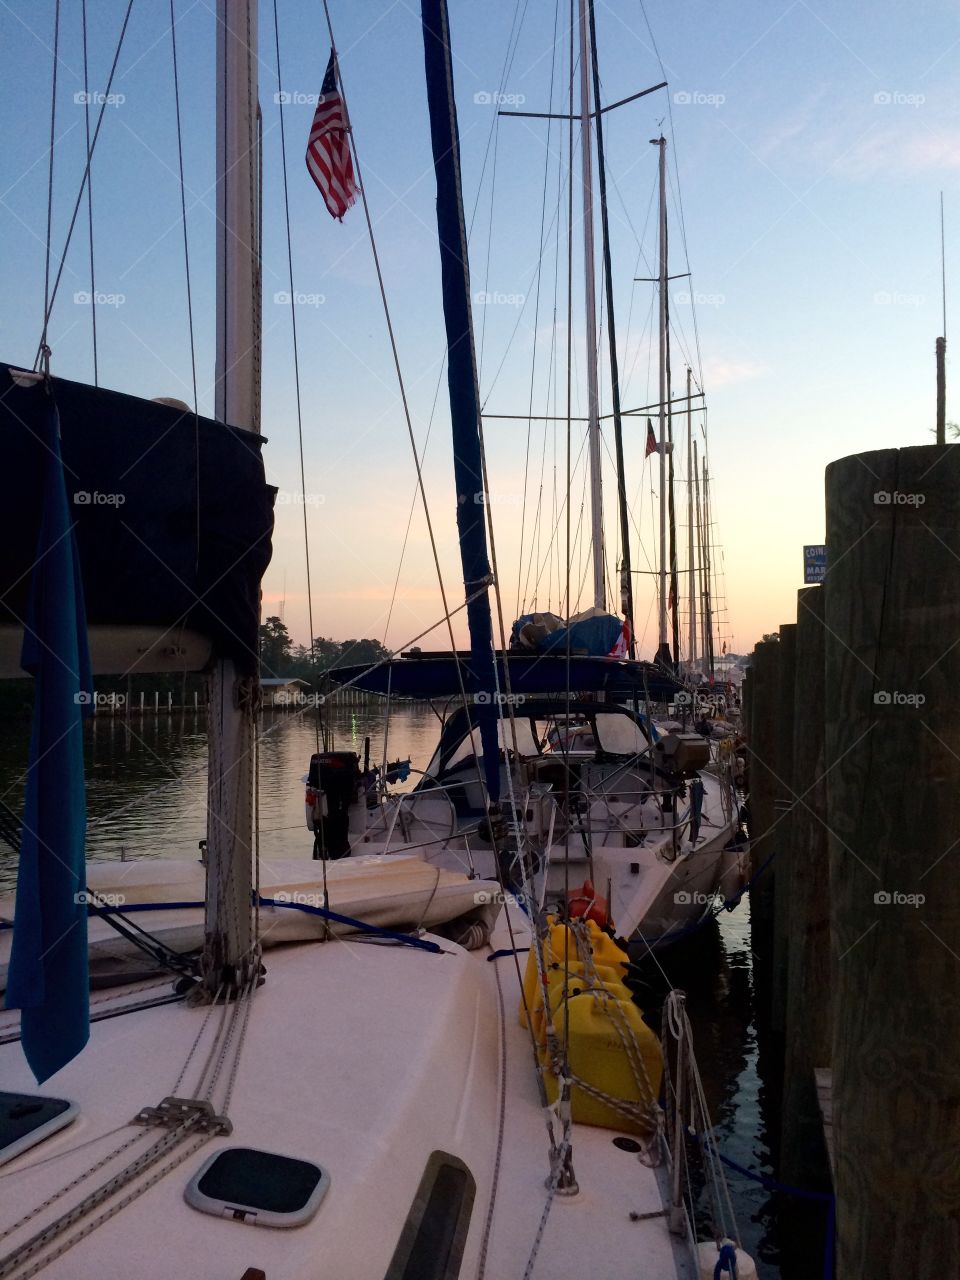 Dock at dusk. Fleet dock at Coinjock marina in ICW